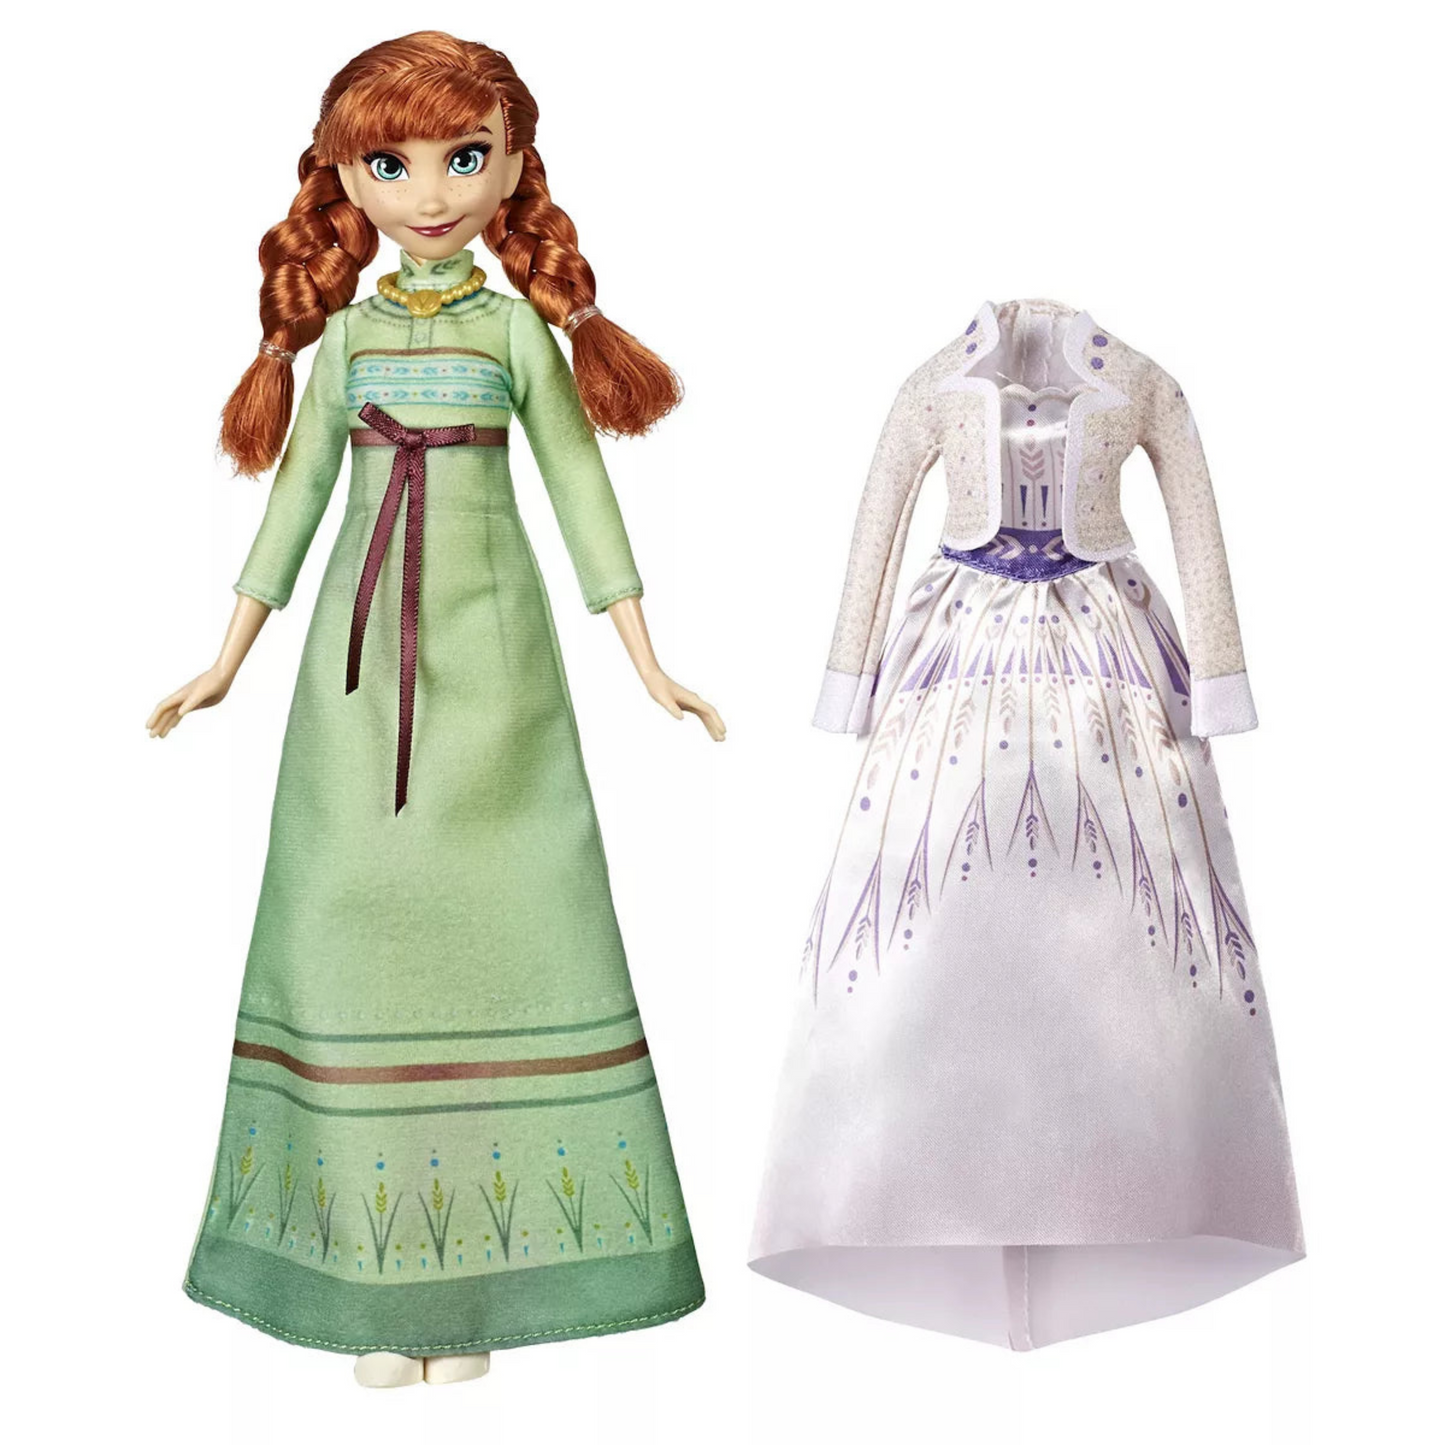 Disney's Frozen 2 Arendelle Fashions Anna Fashion Doll